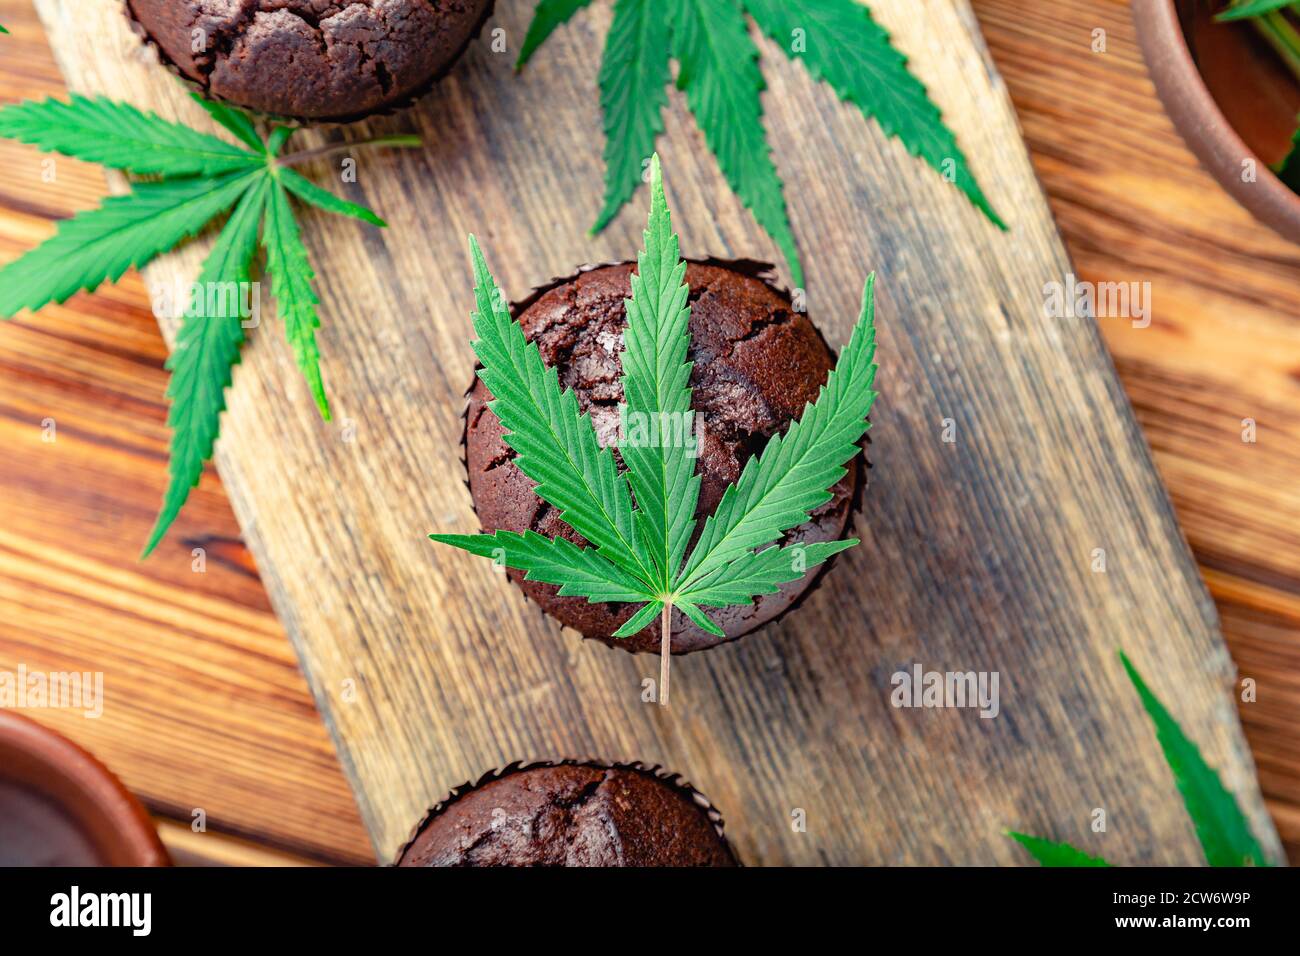 Cupcake with marijuana. Chocolate cupcake muffins with cannabis weed cbd. Medical marijuana hemp drugs in food dessert, ganja legalization. Cooking Stock Photo